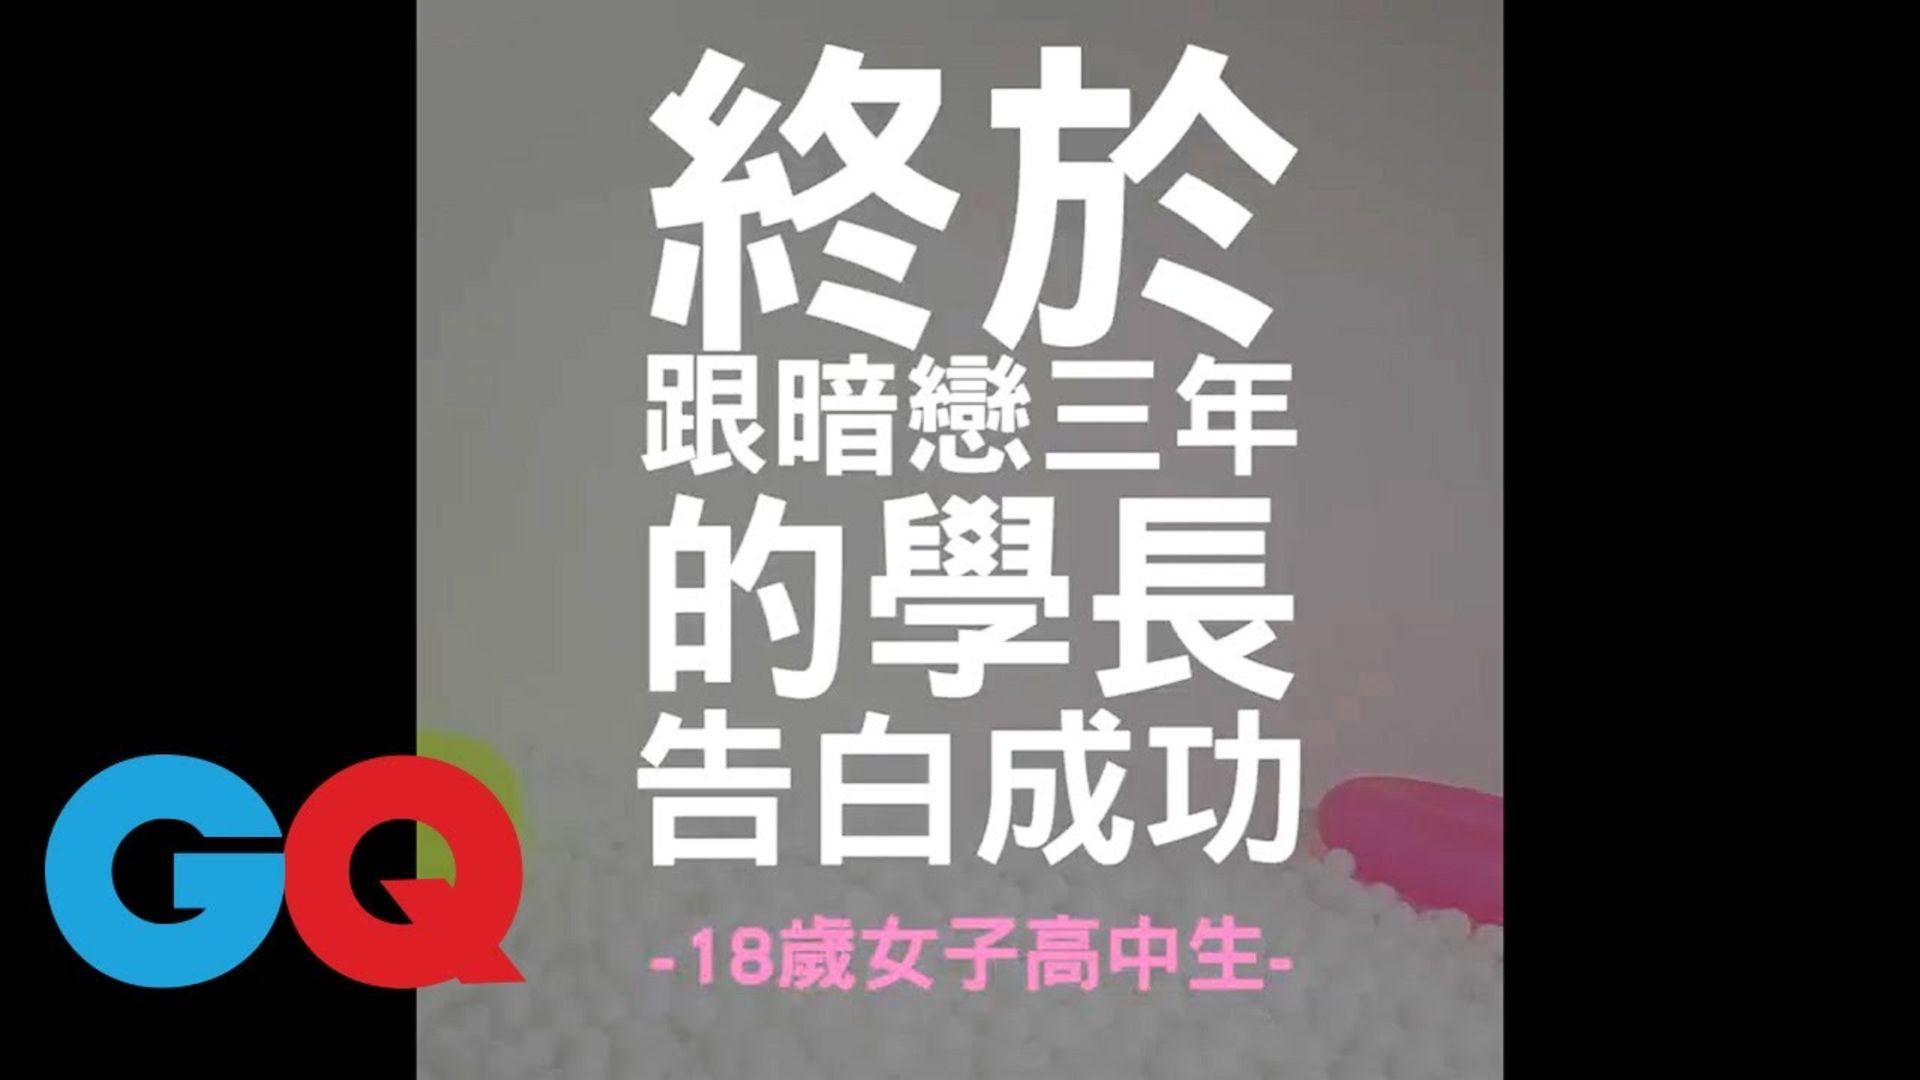 Watch 鼓起勇氣告白的高中女子篇六種跳球池提案 2 Gq 大人的球池 Gq Taiwan